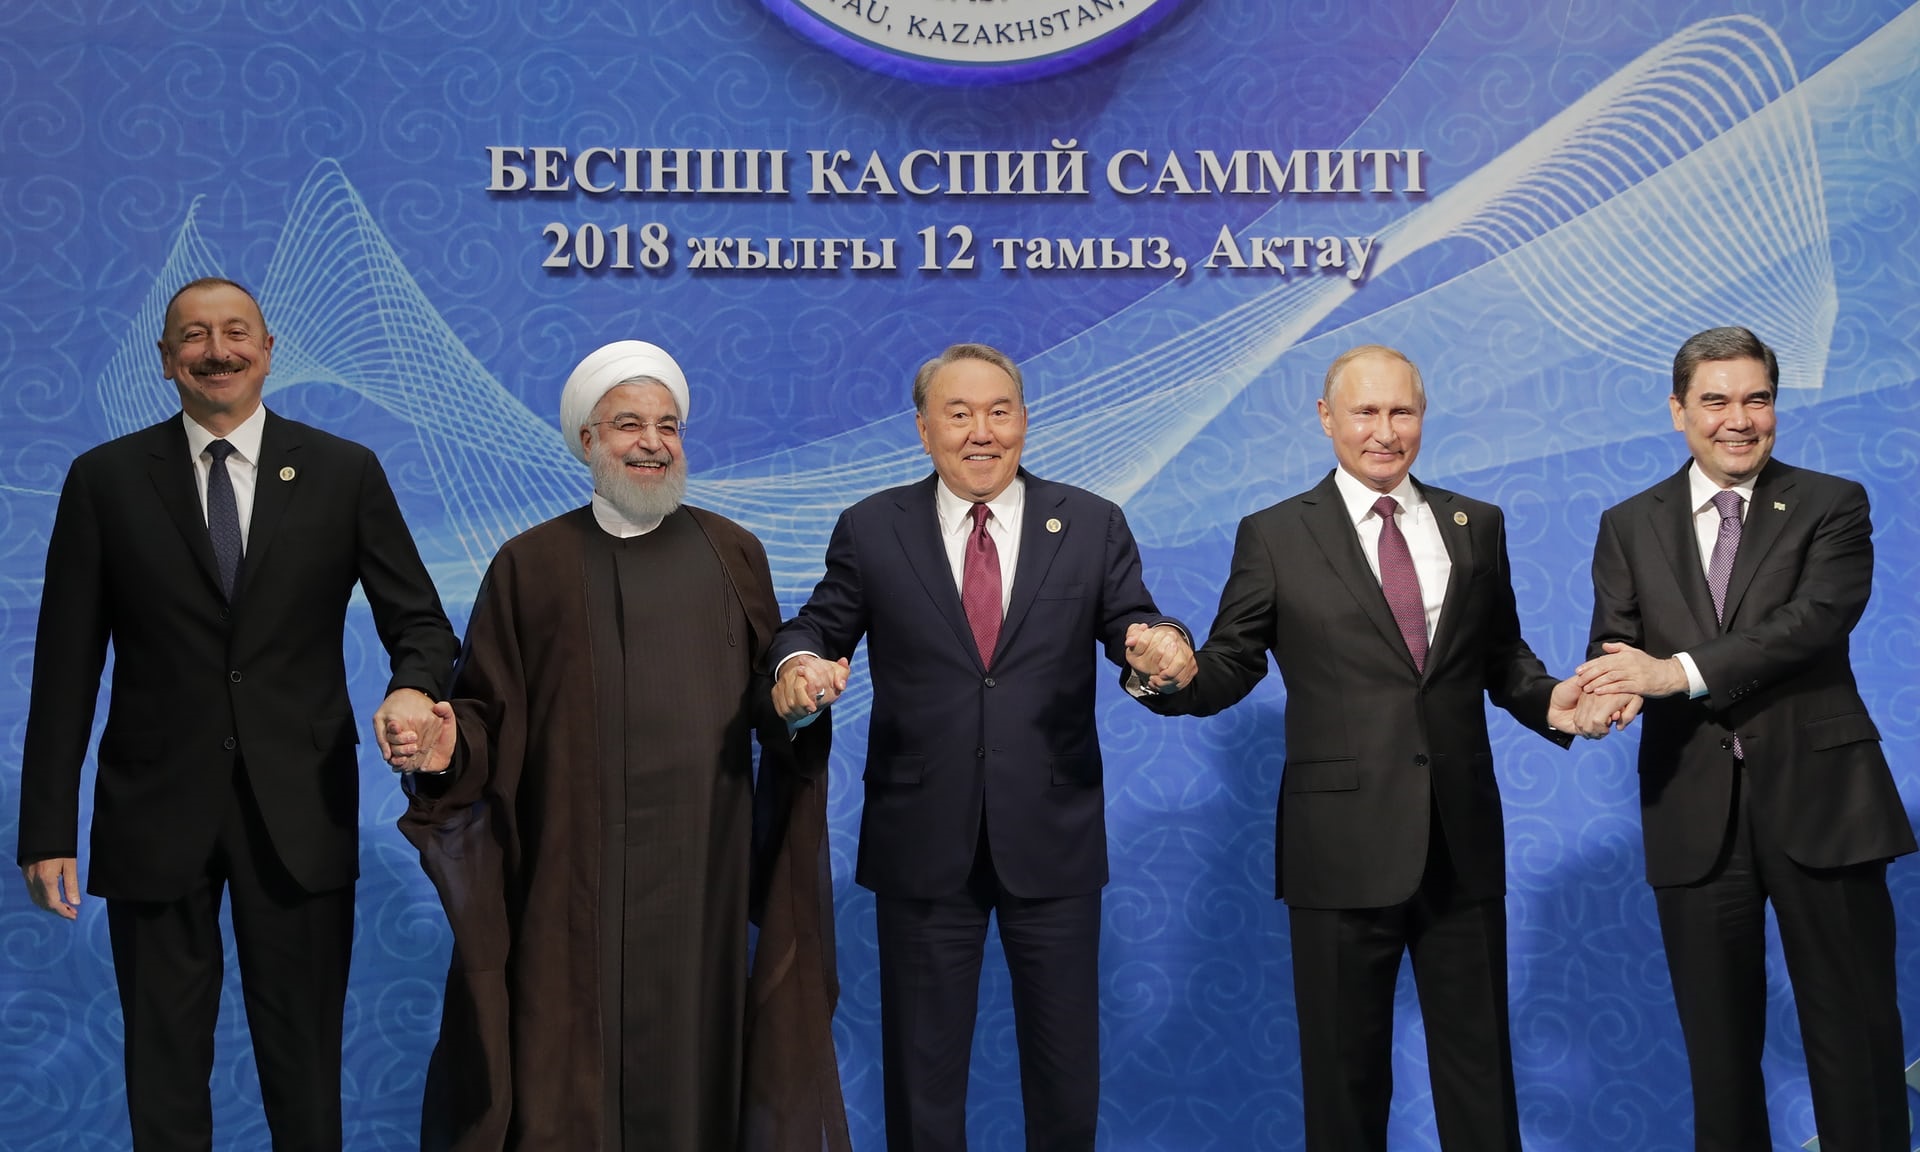 Caspian Sea deal